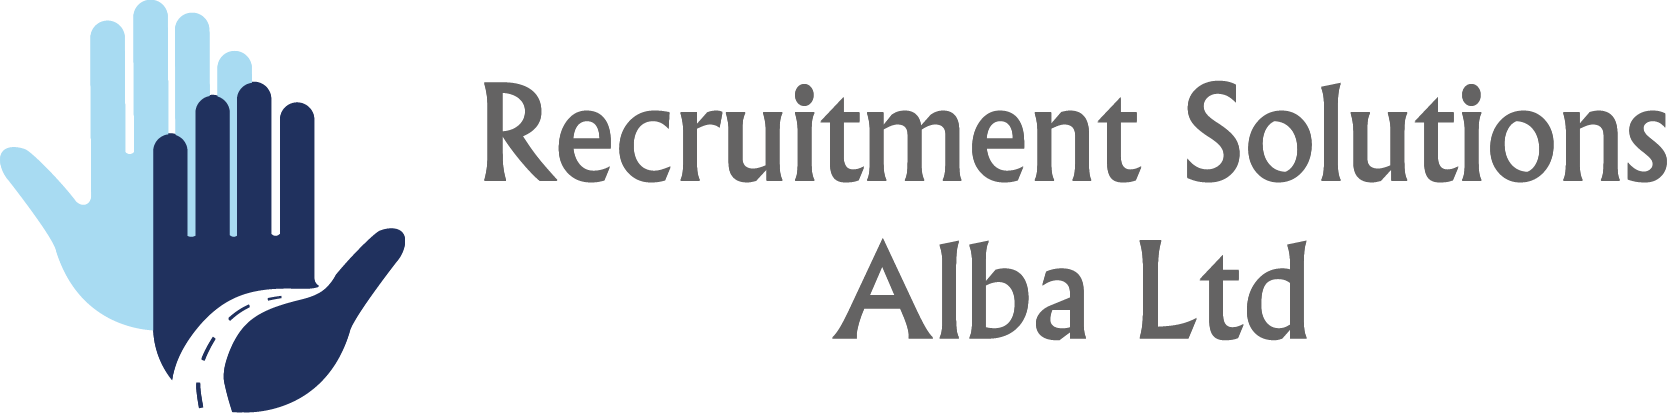 Recruitment Solutions Alba Ltd